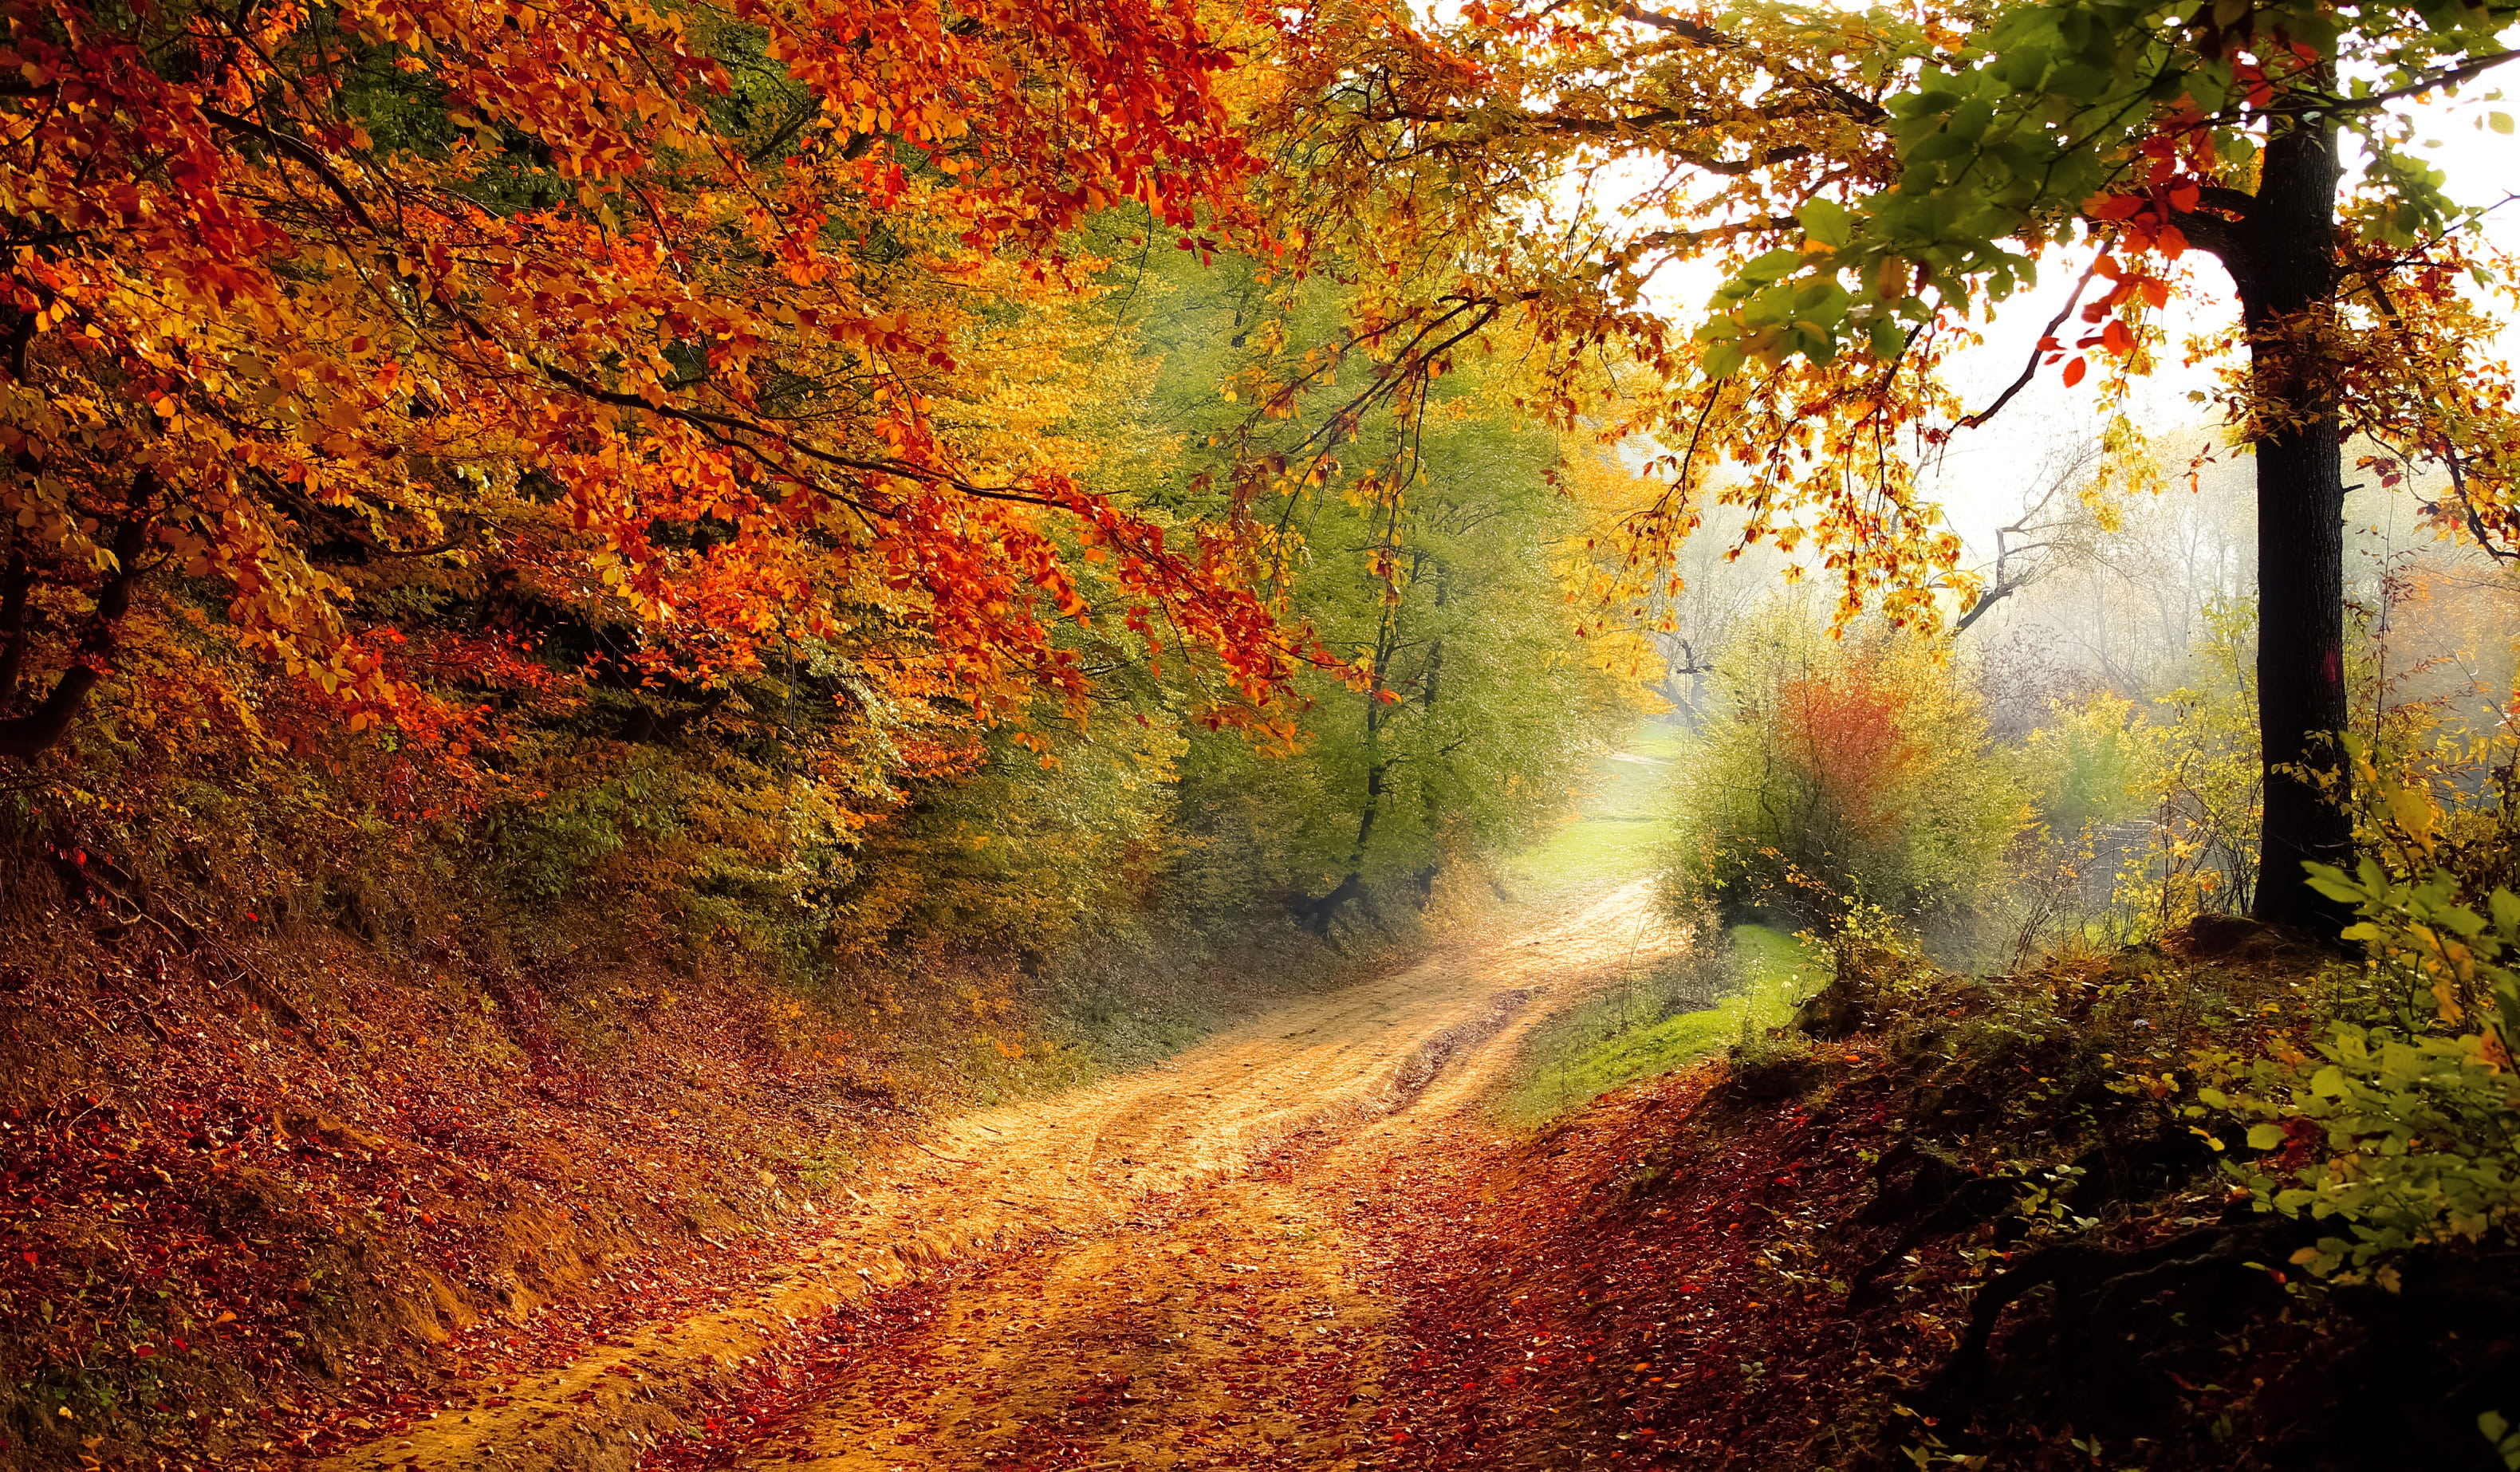 road-forest-season-autumn-acb7a2b0419ad339e3836ce29f592fda.jpg